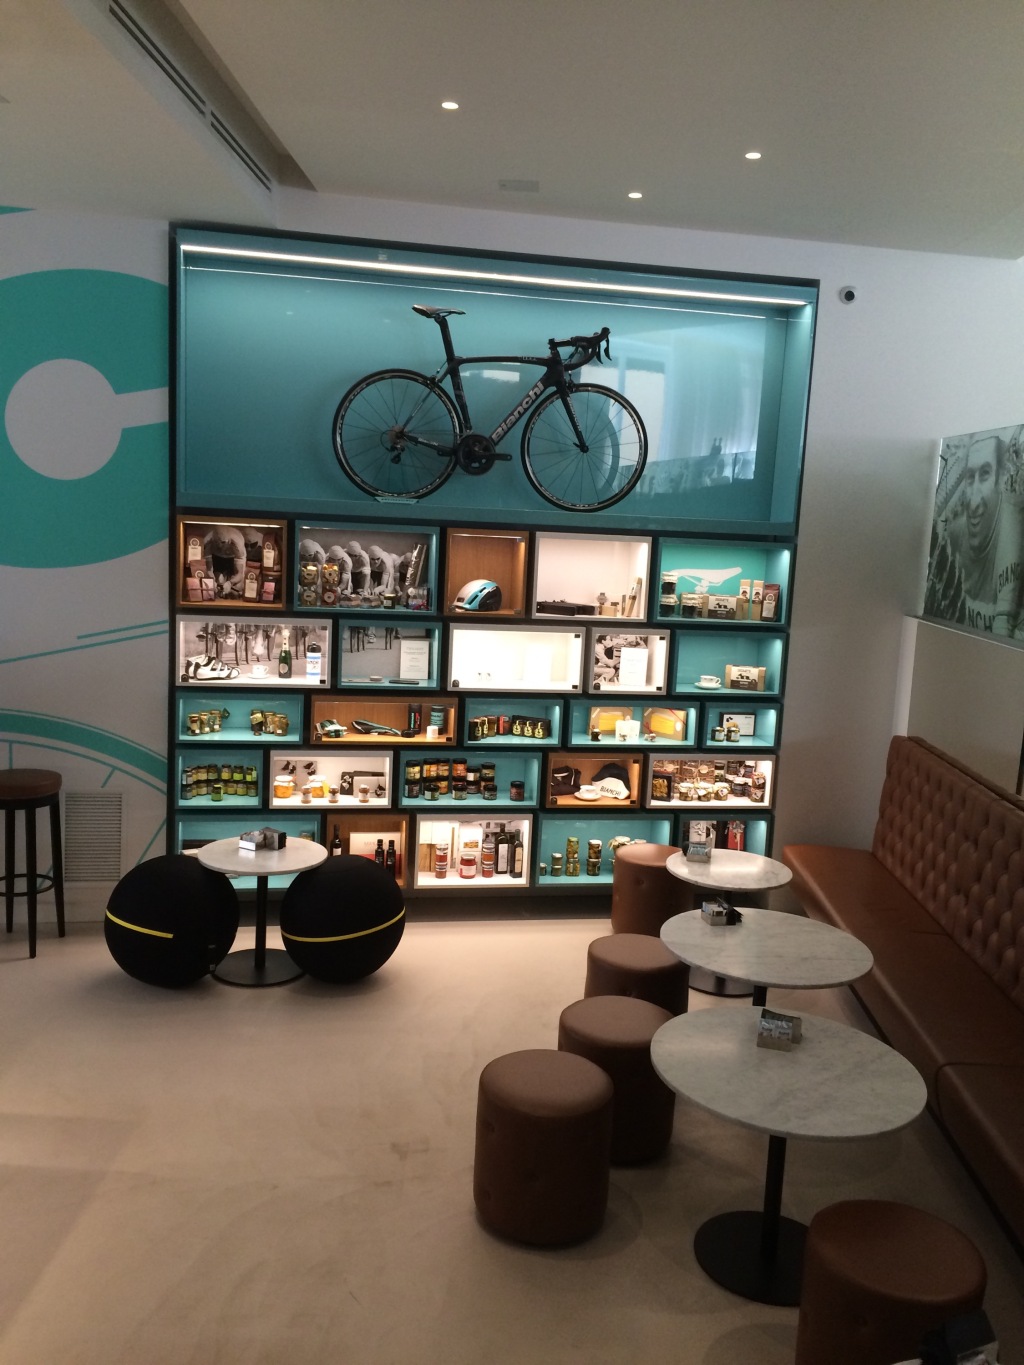 Bianchi Cafè and Cycles